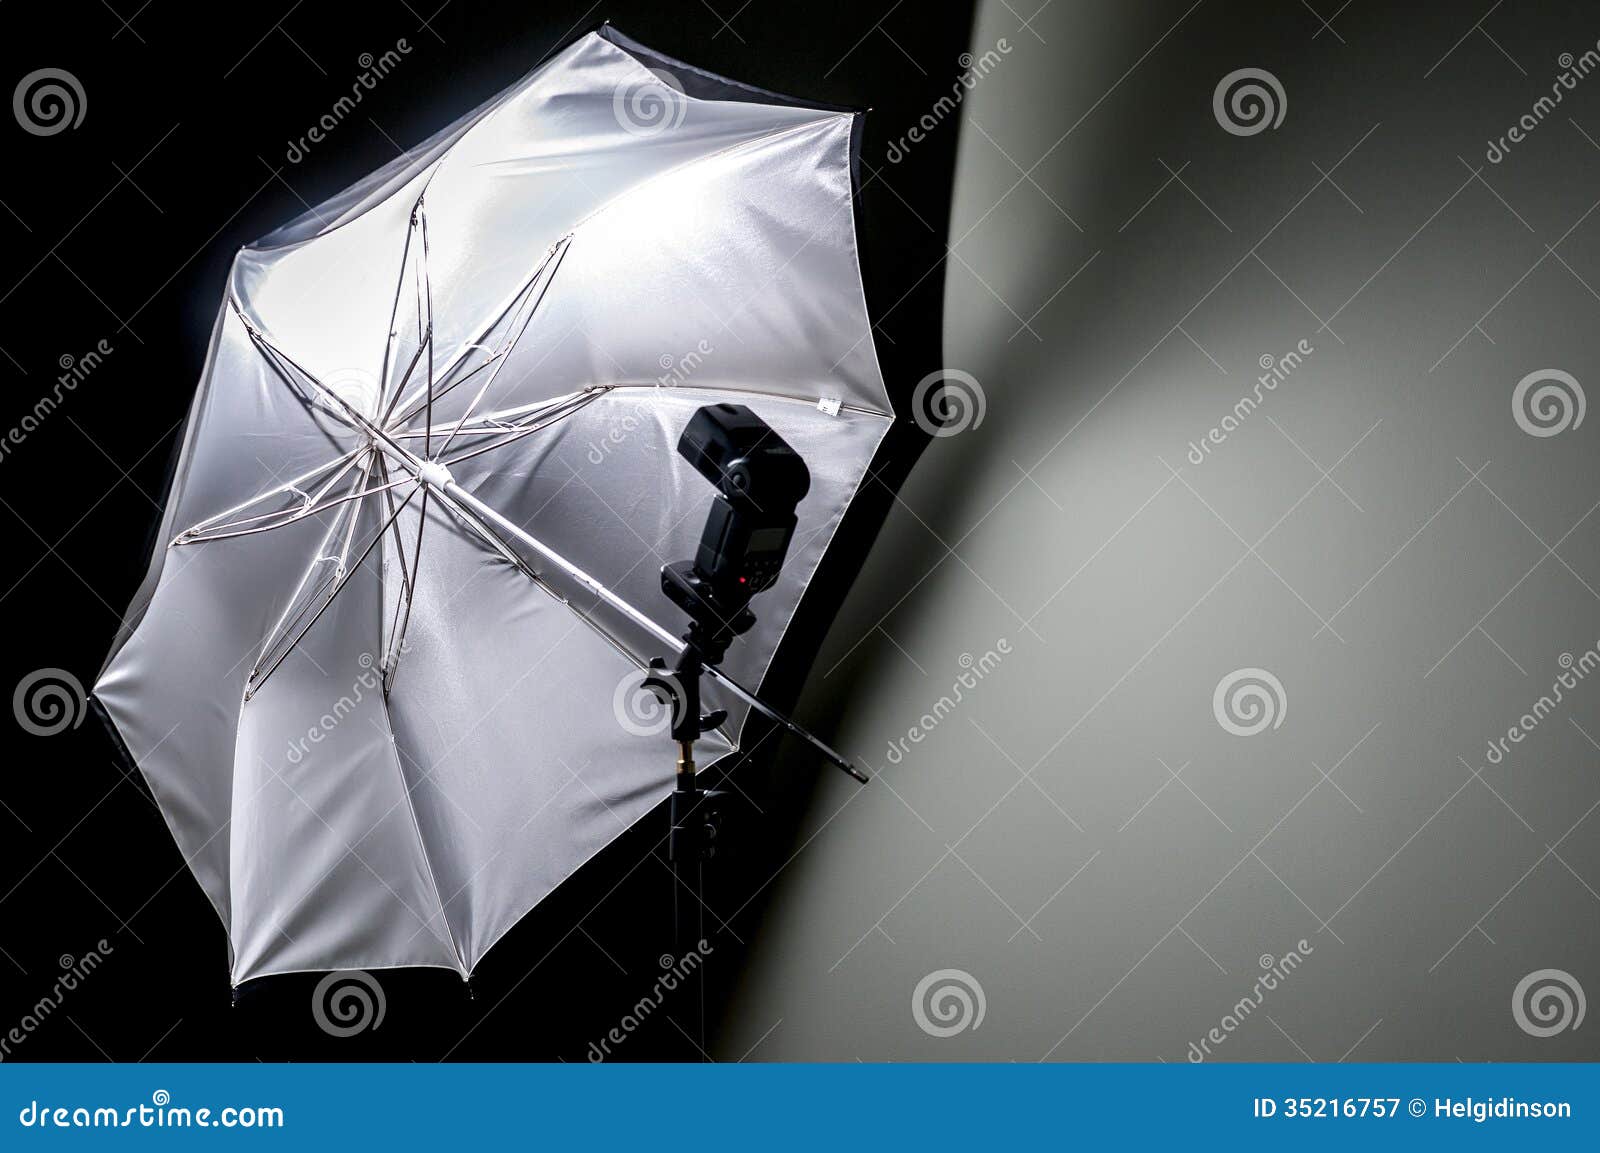 umbrella reflector with flash gun